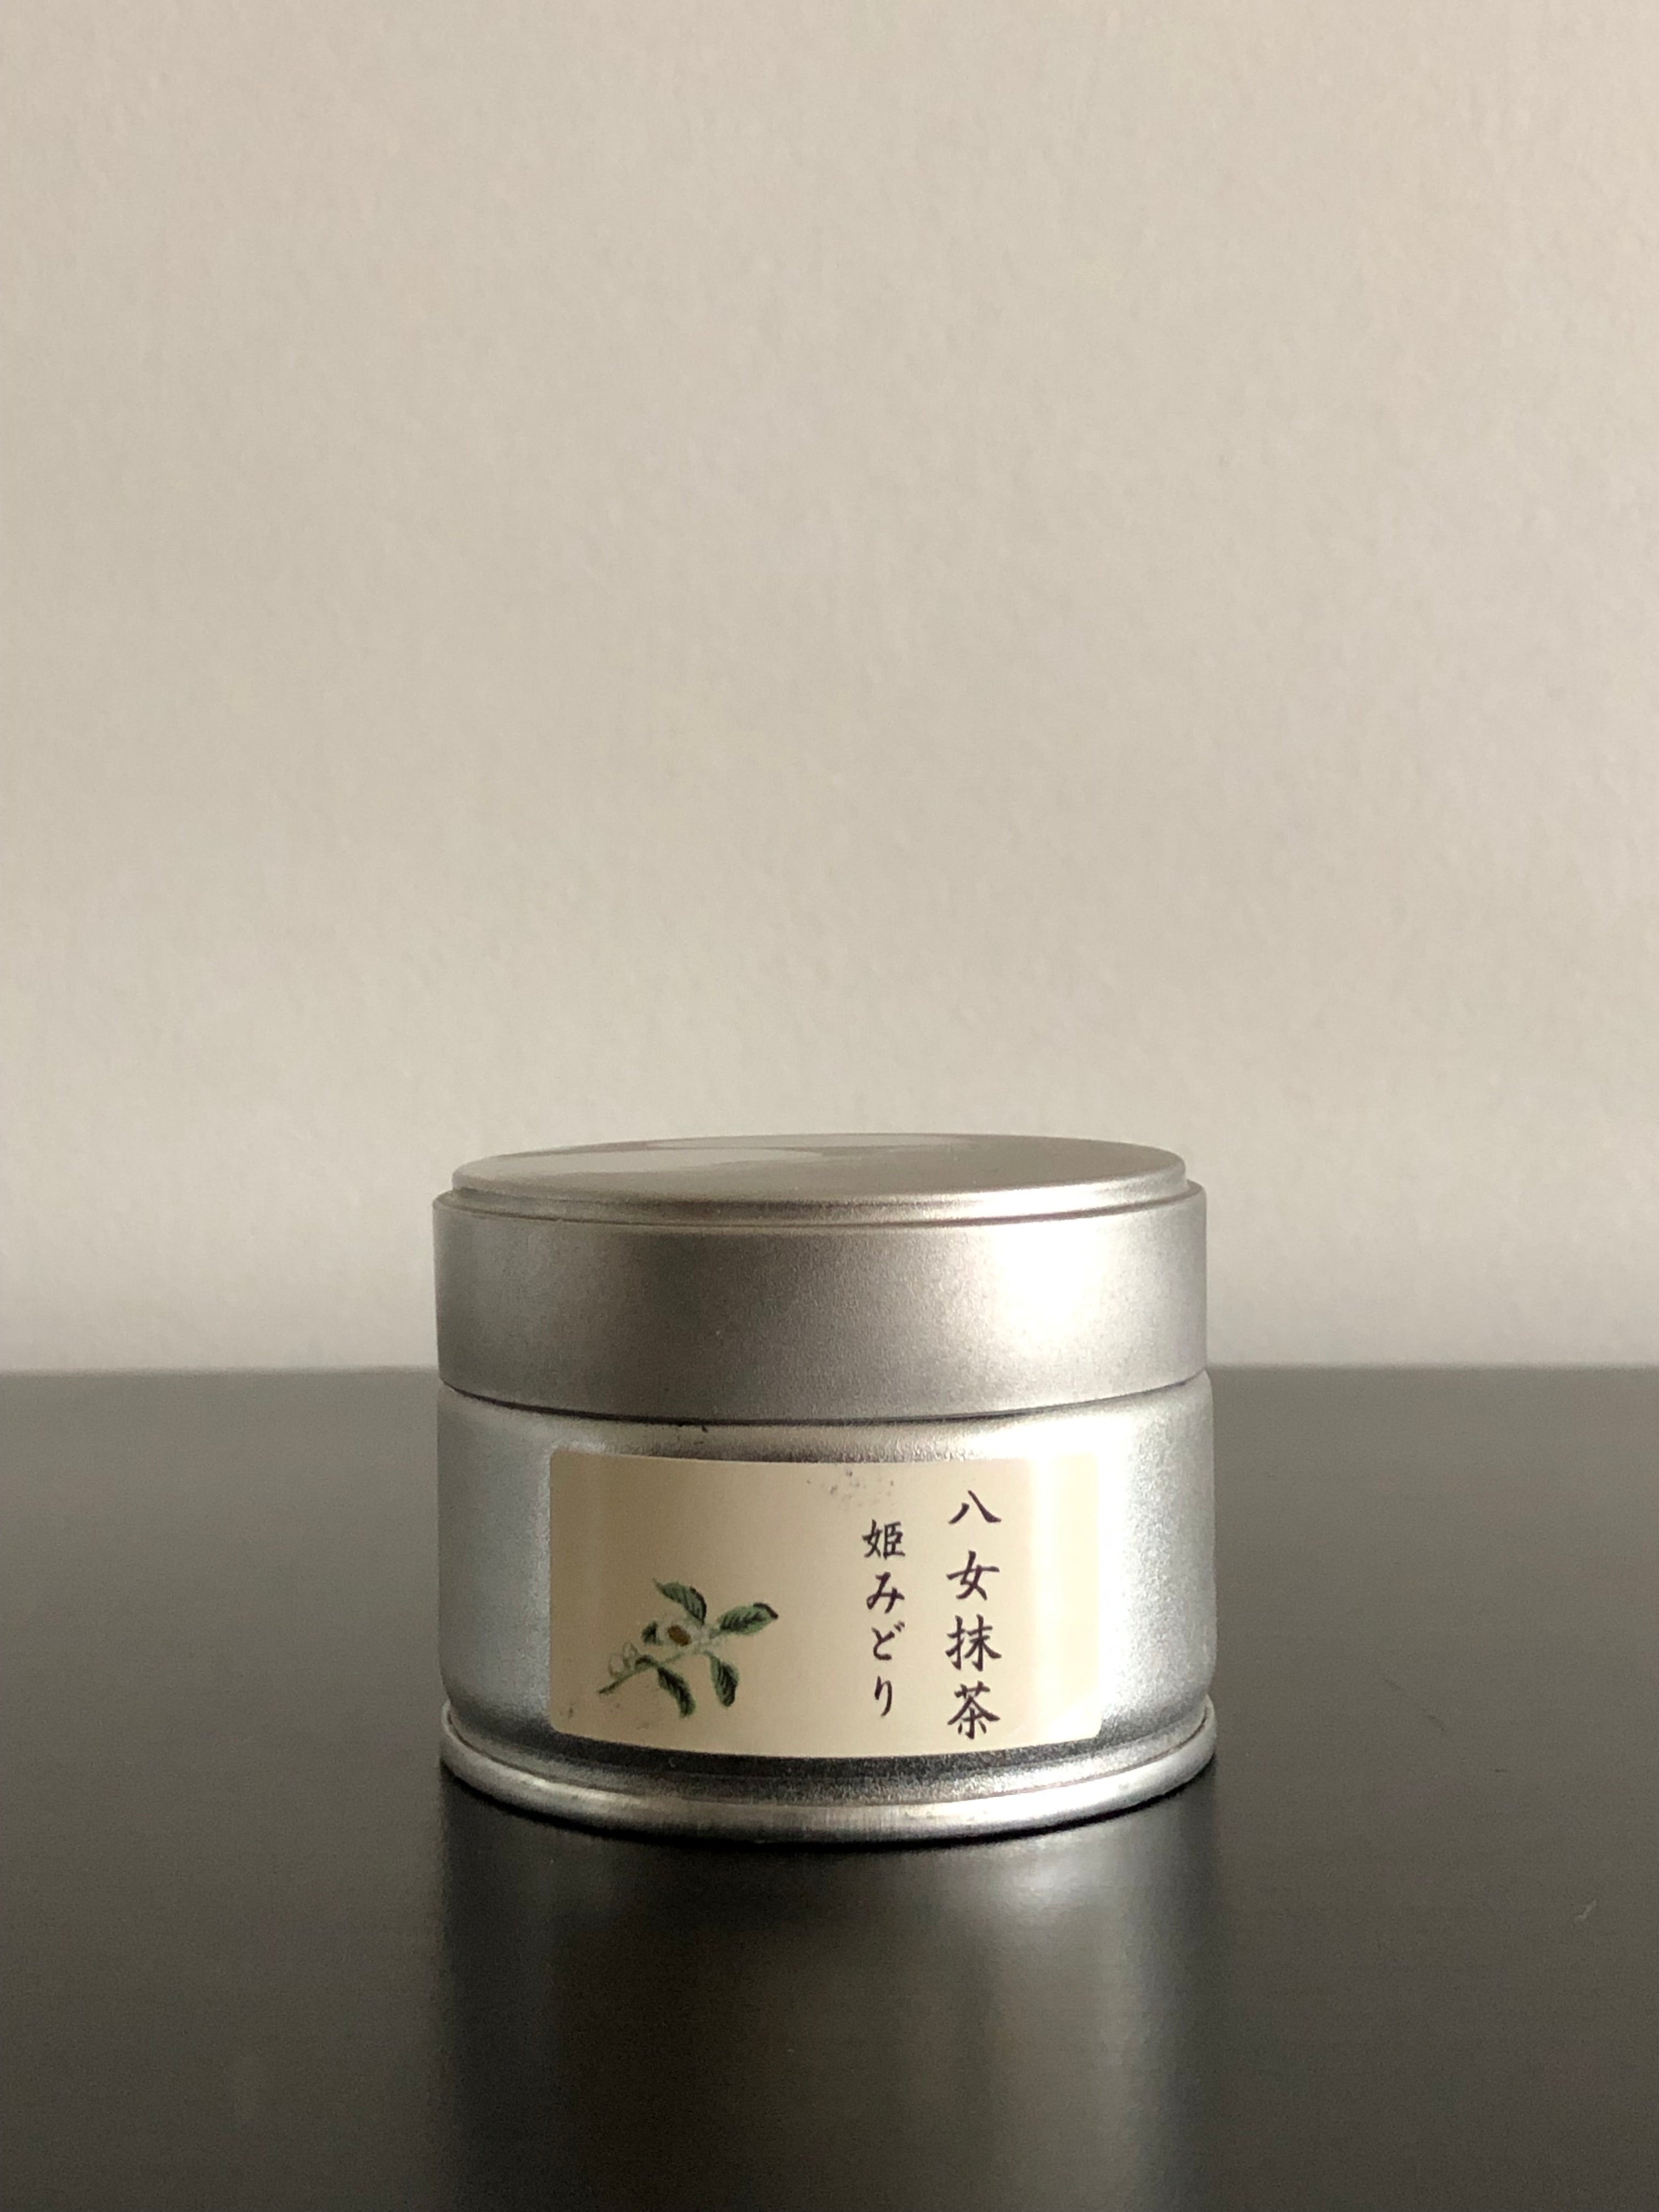 Himemidori ceremonial organic matcha green tea powder from Yabe Yame Fukuoka sold by Sabo Tea Australia in 20g tin - Chiyonoen